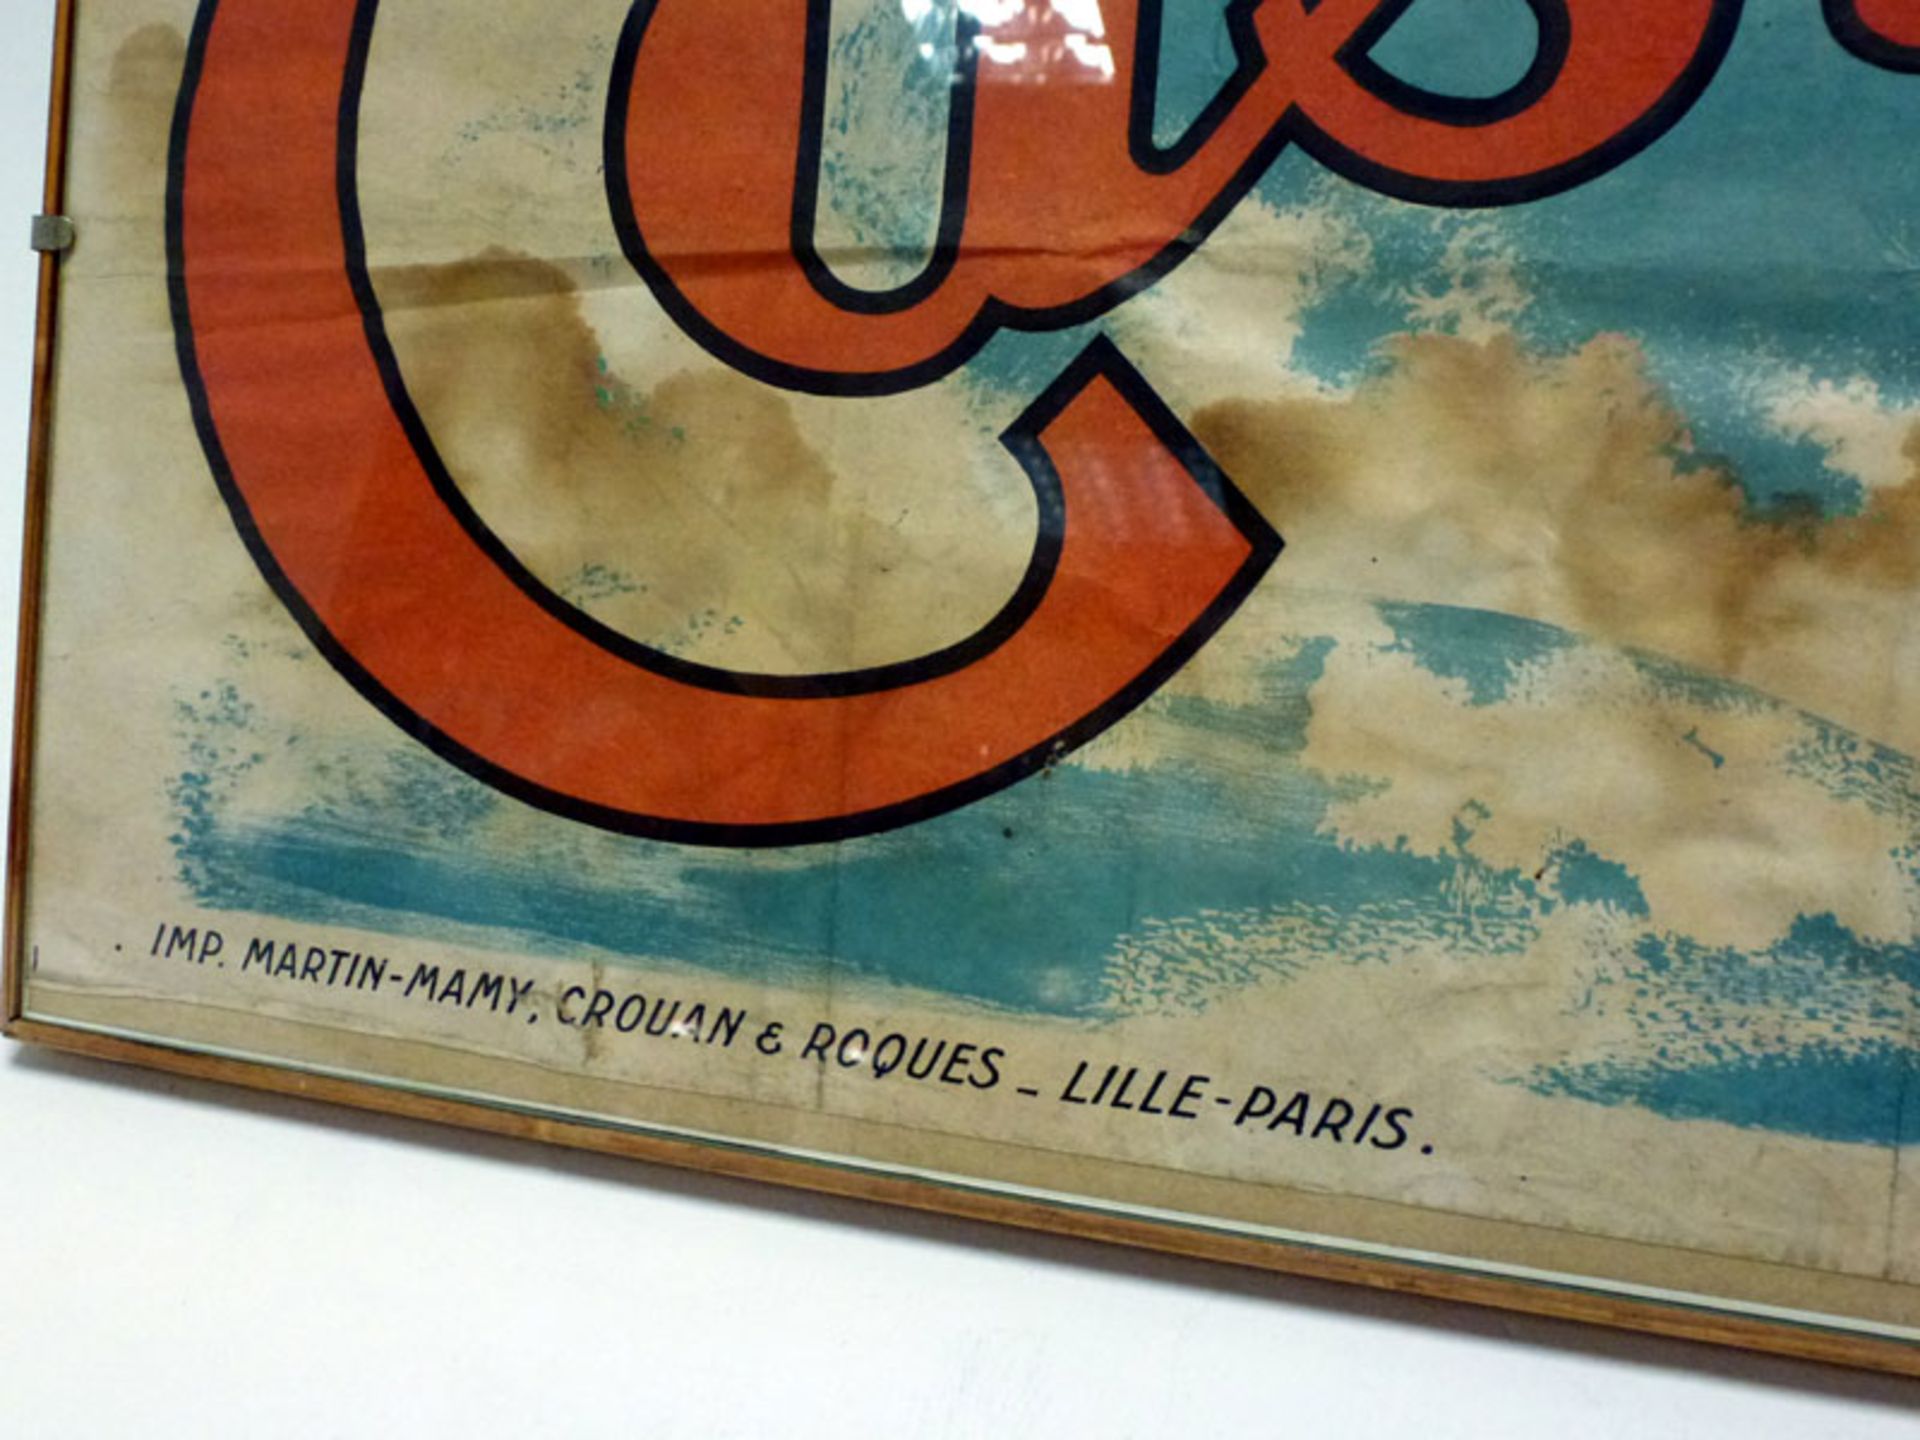 A Rare Original Castrol Oil Achievements Poster - Image 2 of 3